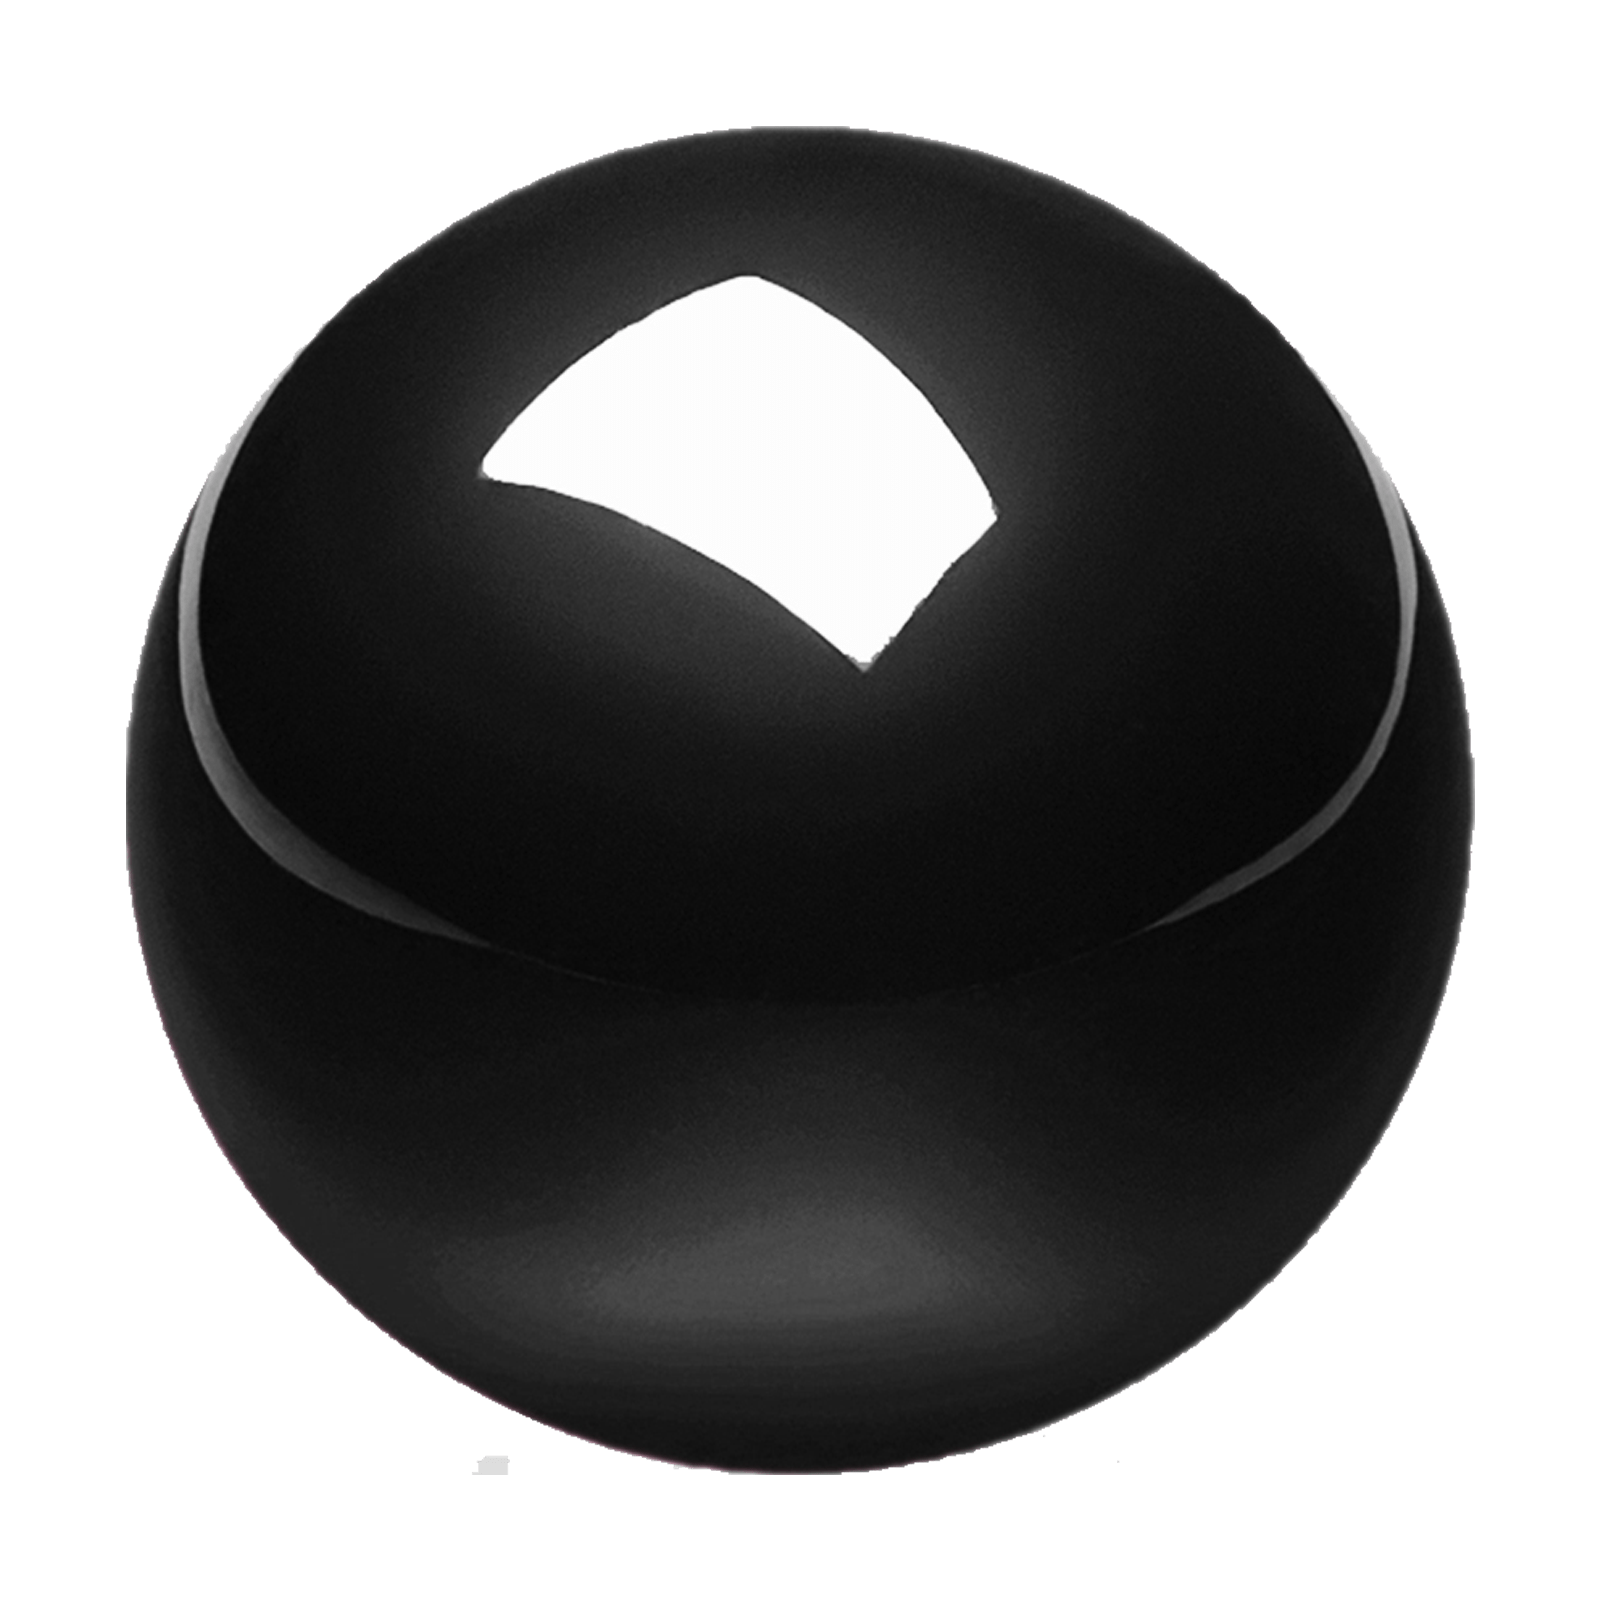 PERIPRO-303 GBK - Glossy Black 34mm Trackball - Perixx Europe